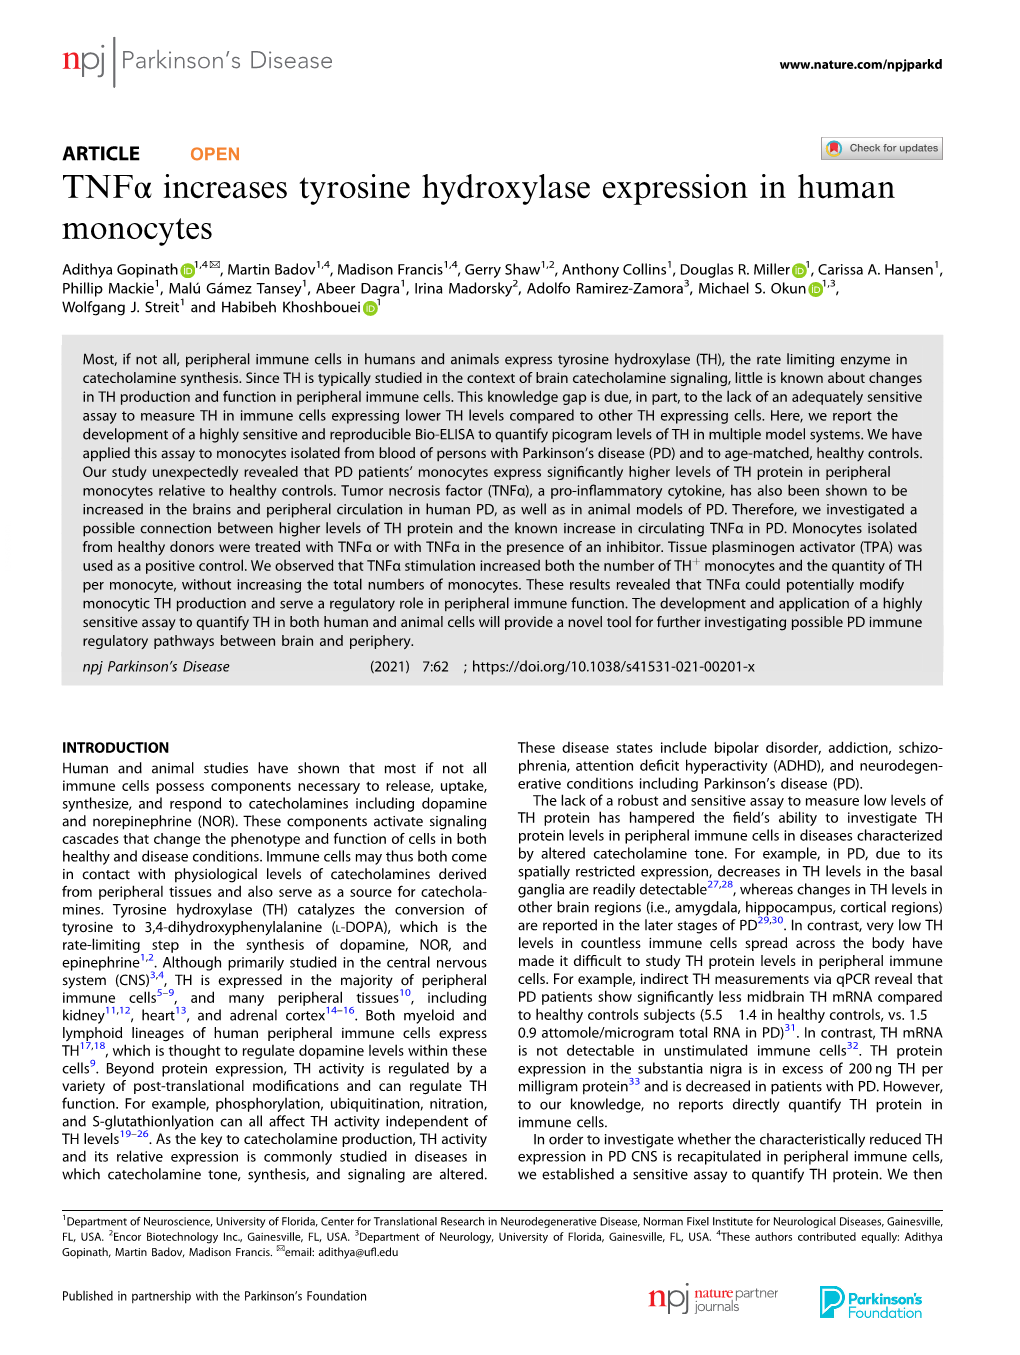 Tnfα Increases Tyrosine Hydroxylase Expression in Human Monocytes